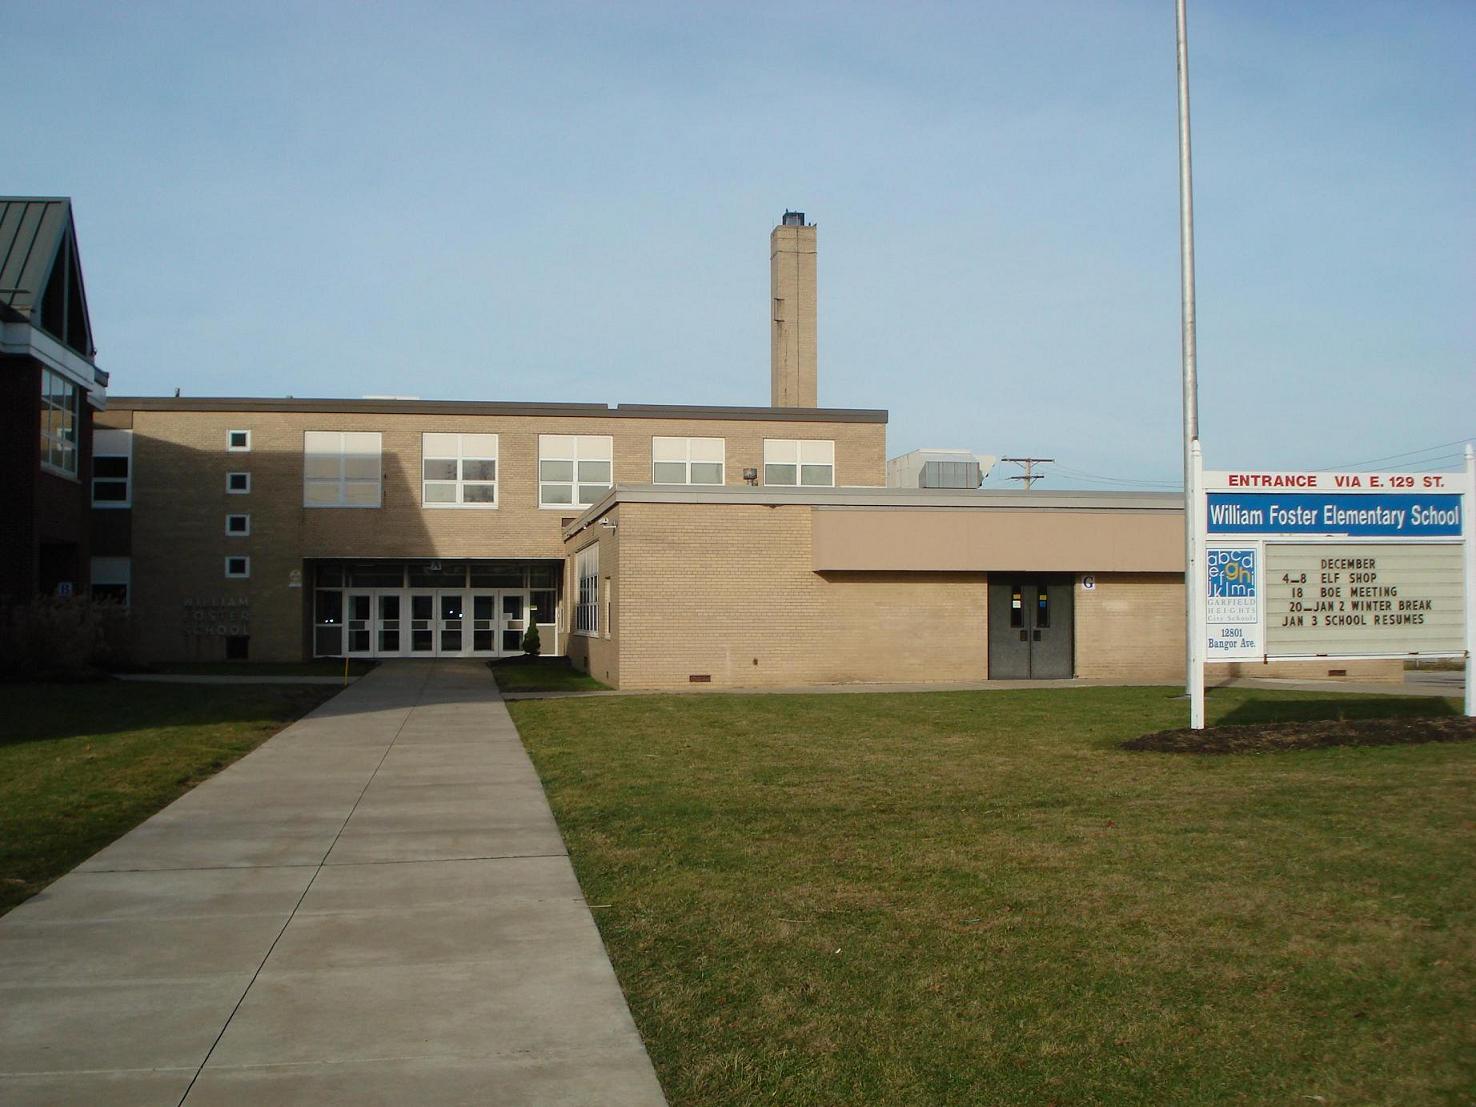 William Foster Elementary School